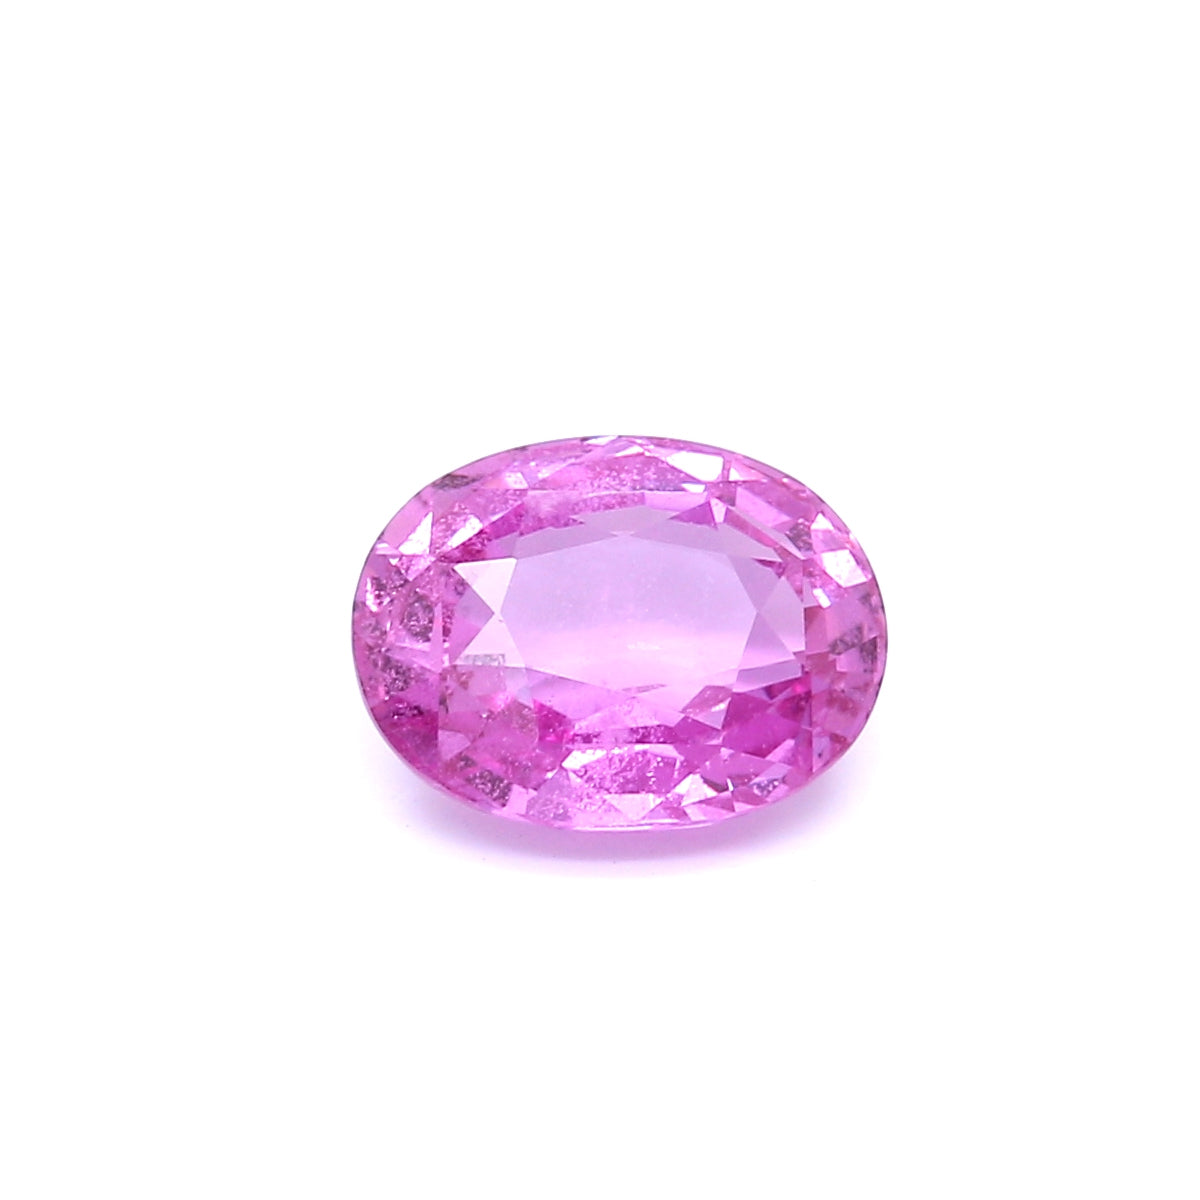 2.50ct Purplish Pink, Oval Sapphire, Heated, Madagascar - 9.04 x 6.93 x 4.25mm